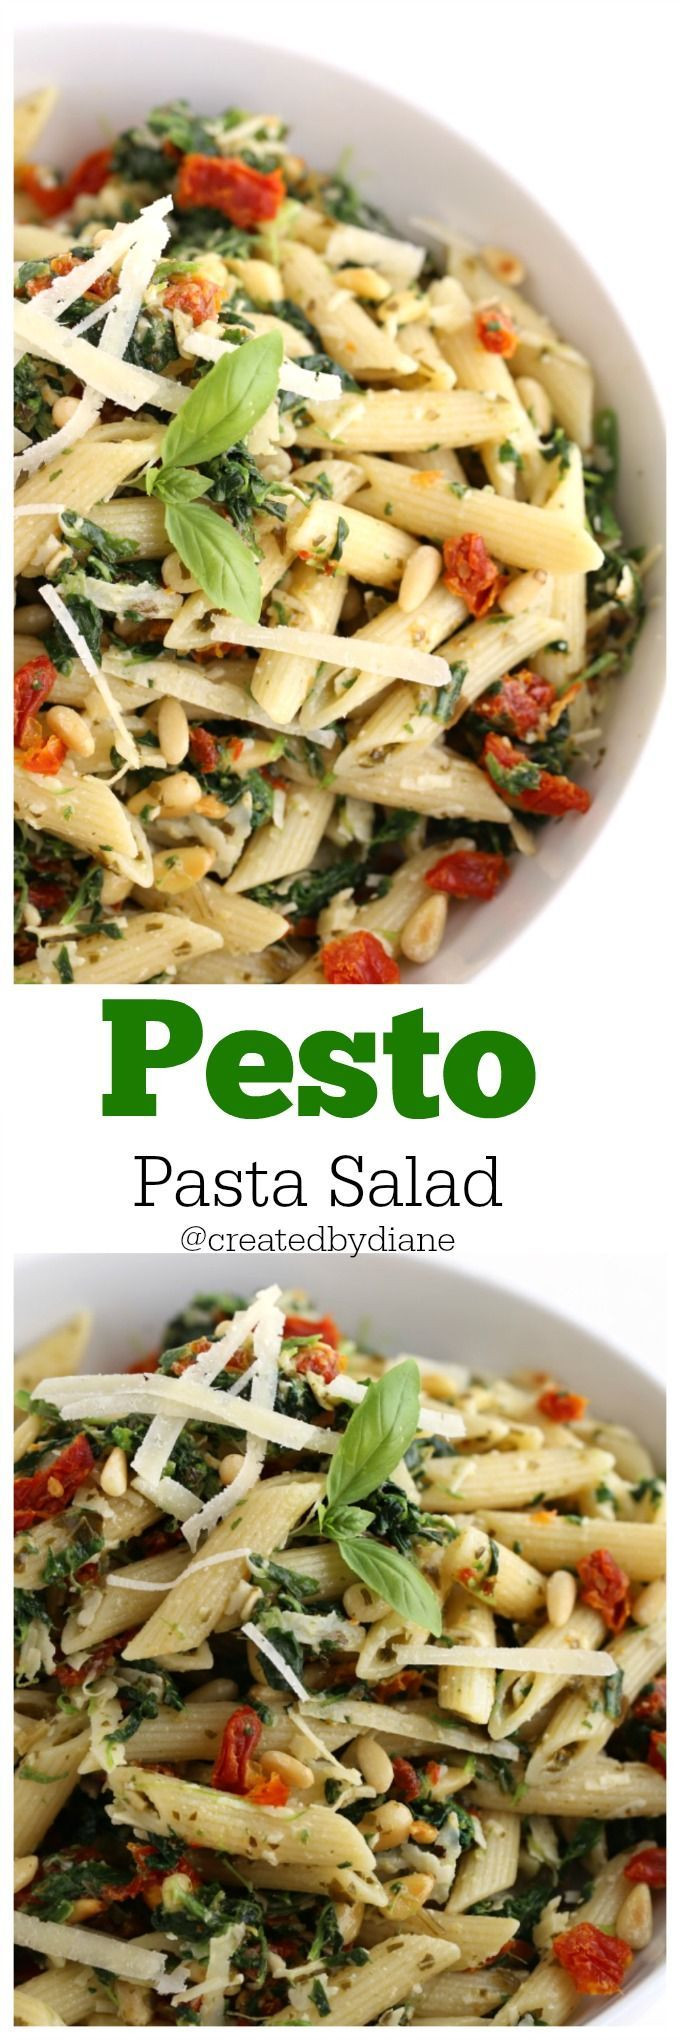 Heart Healthy Pasta Recipes
 Pesto Pasta Salad Recipe